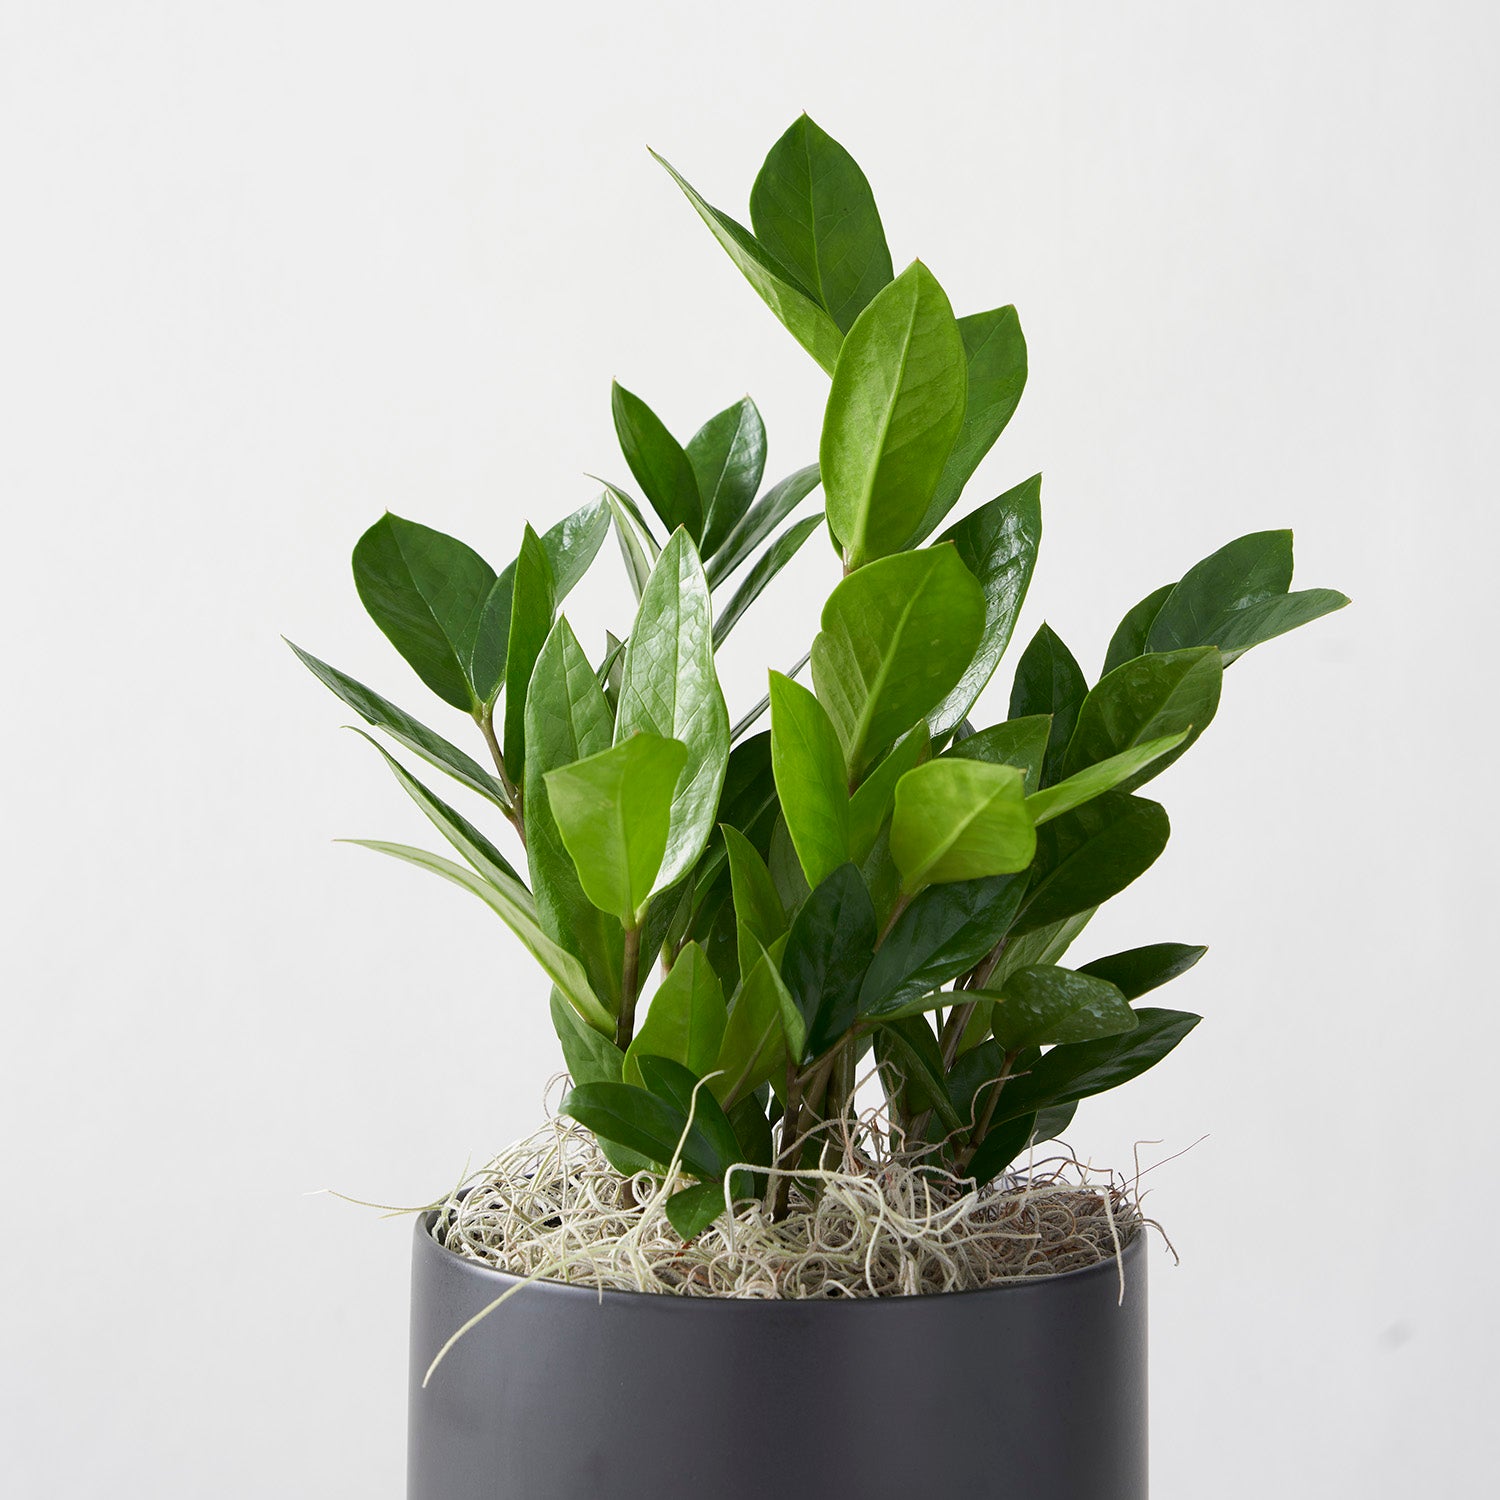 Closeup of ZZ plant in black ceramic pot on white background.